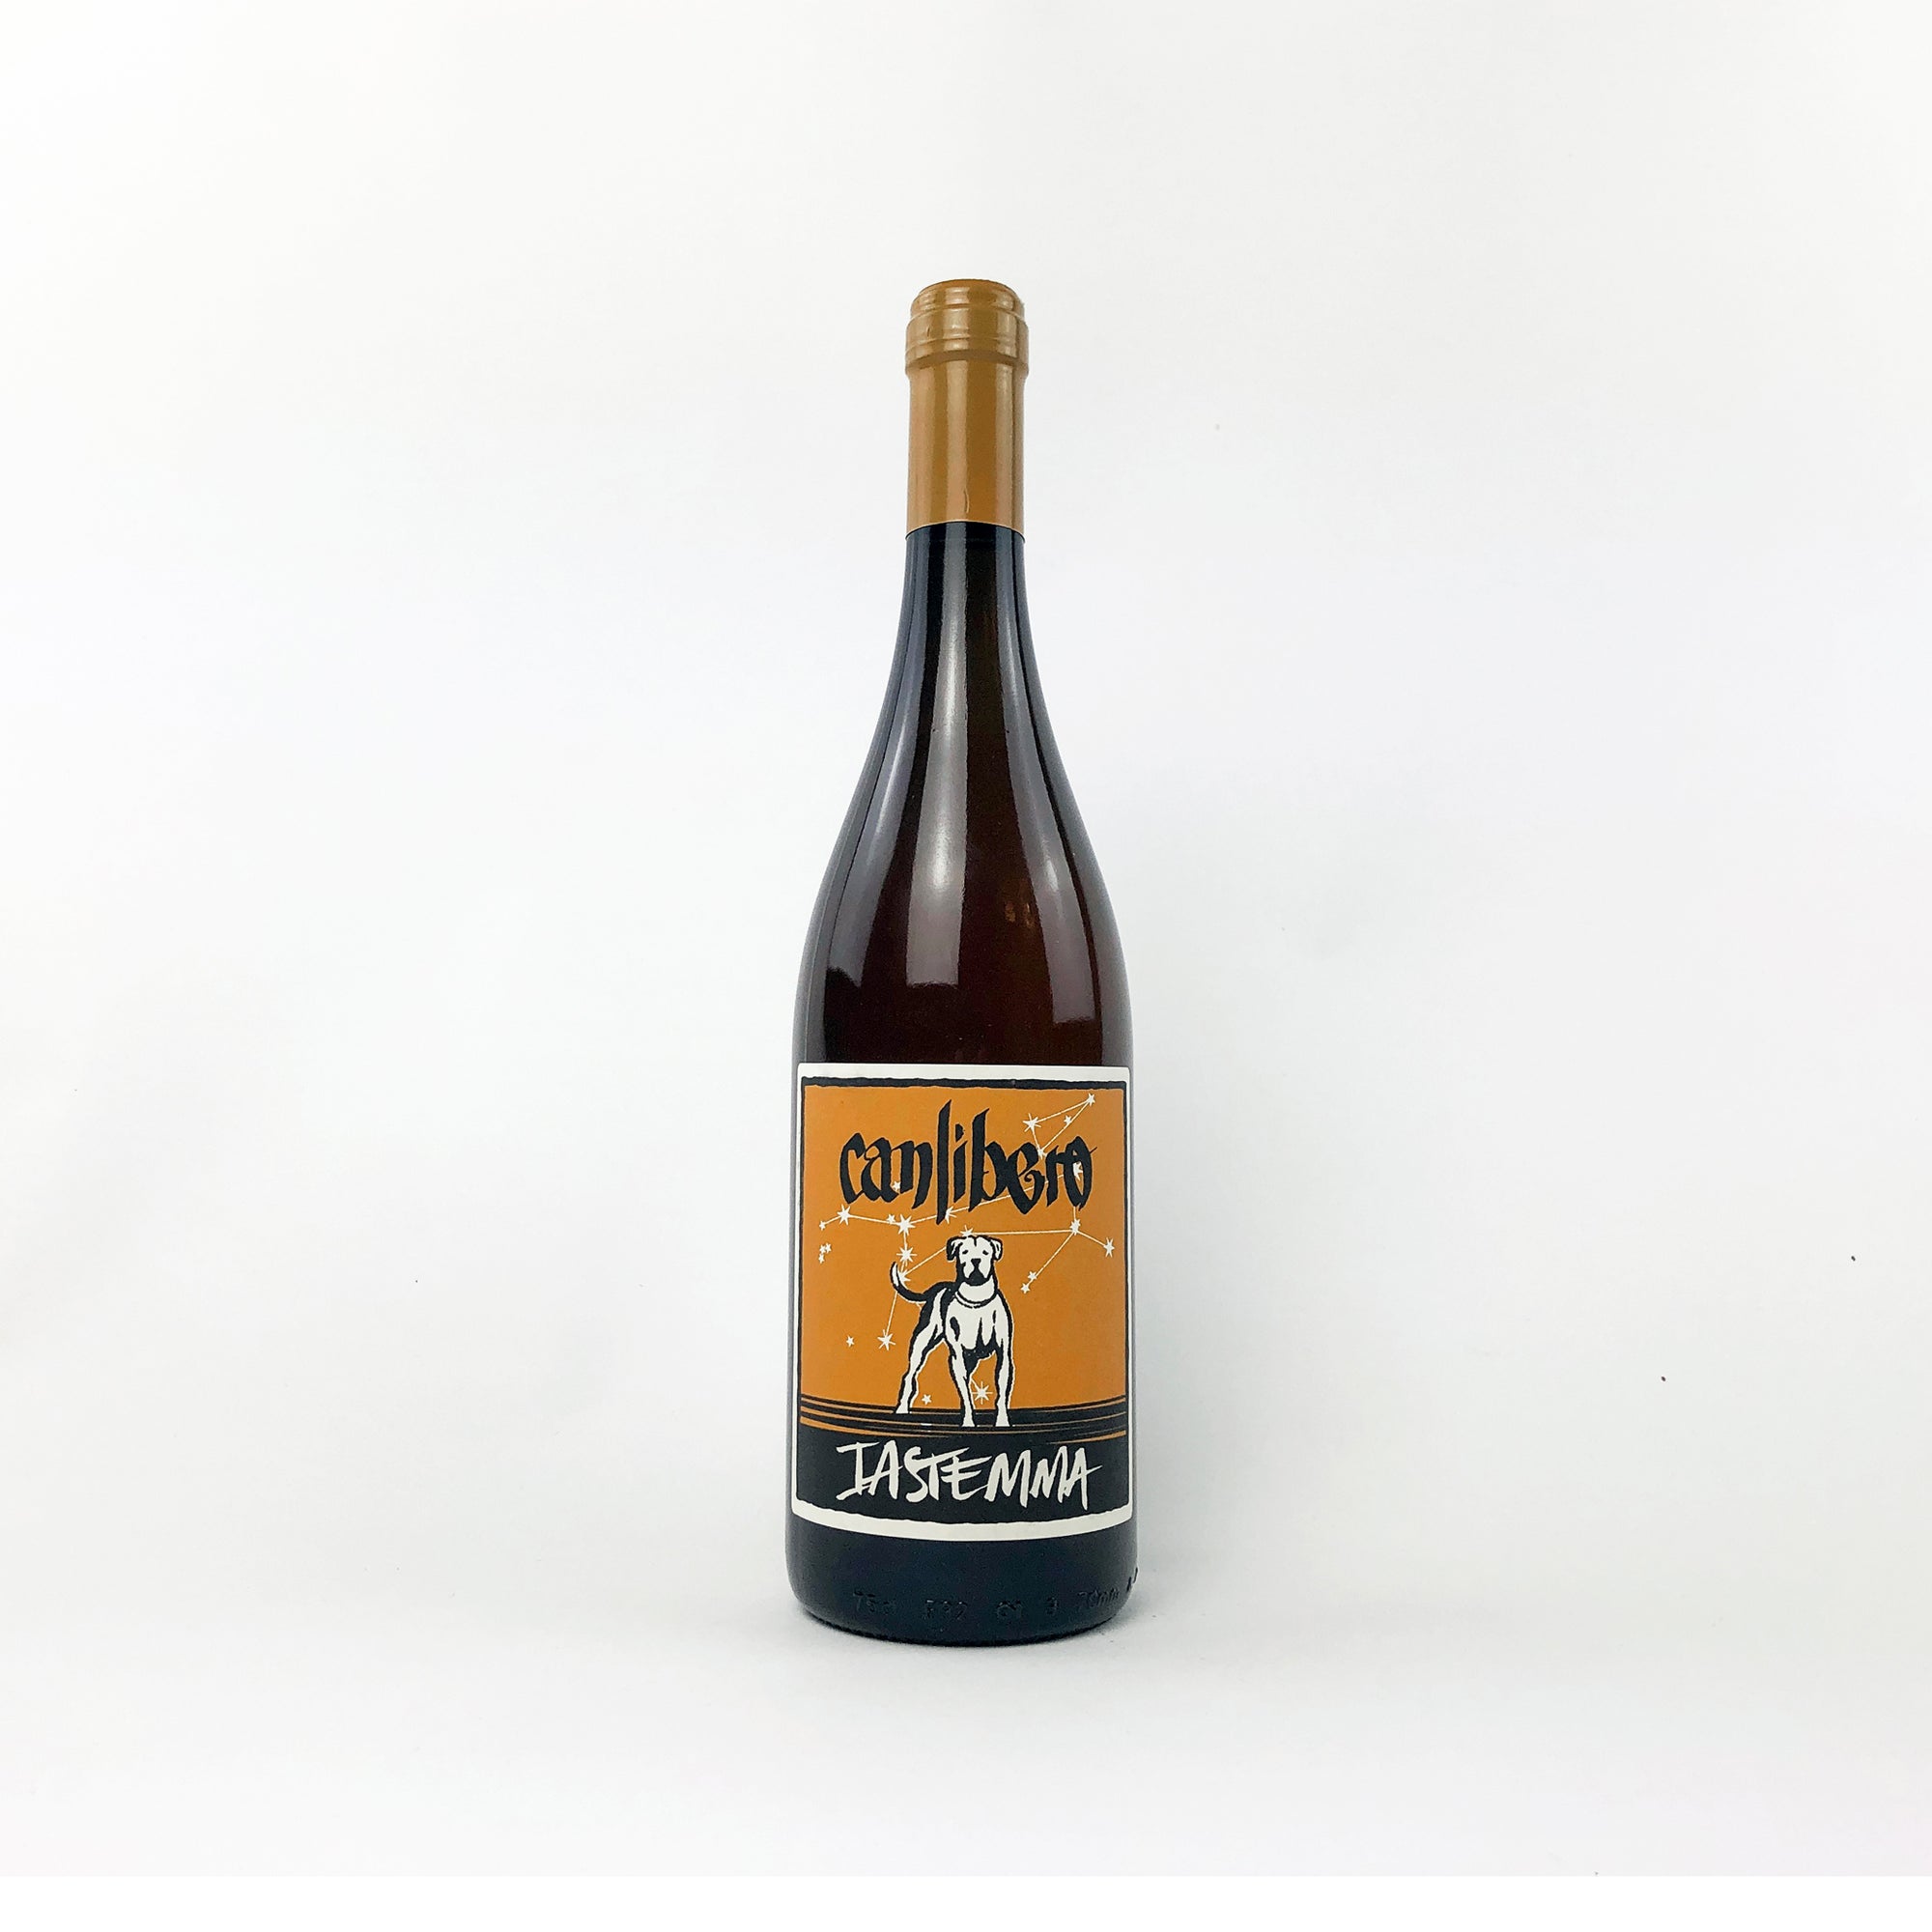 Canlibero, Iastemma, natural wine bottle, Orangewine, Campania, Italy